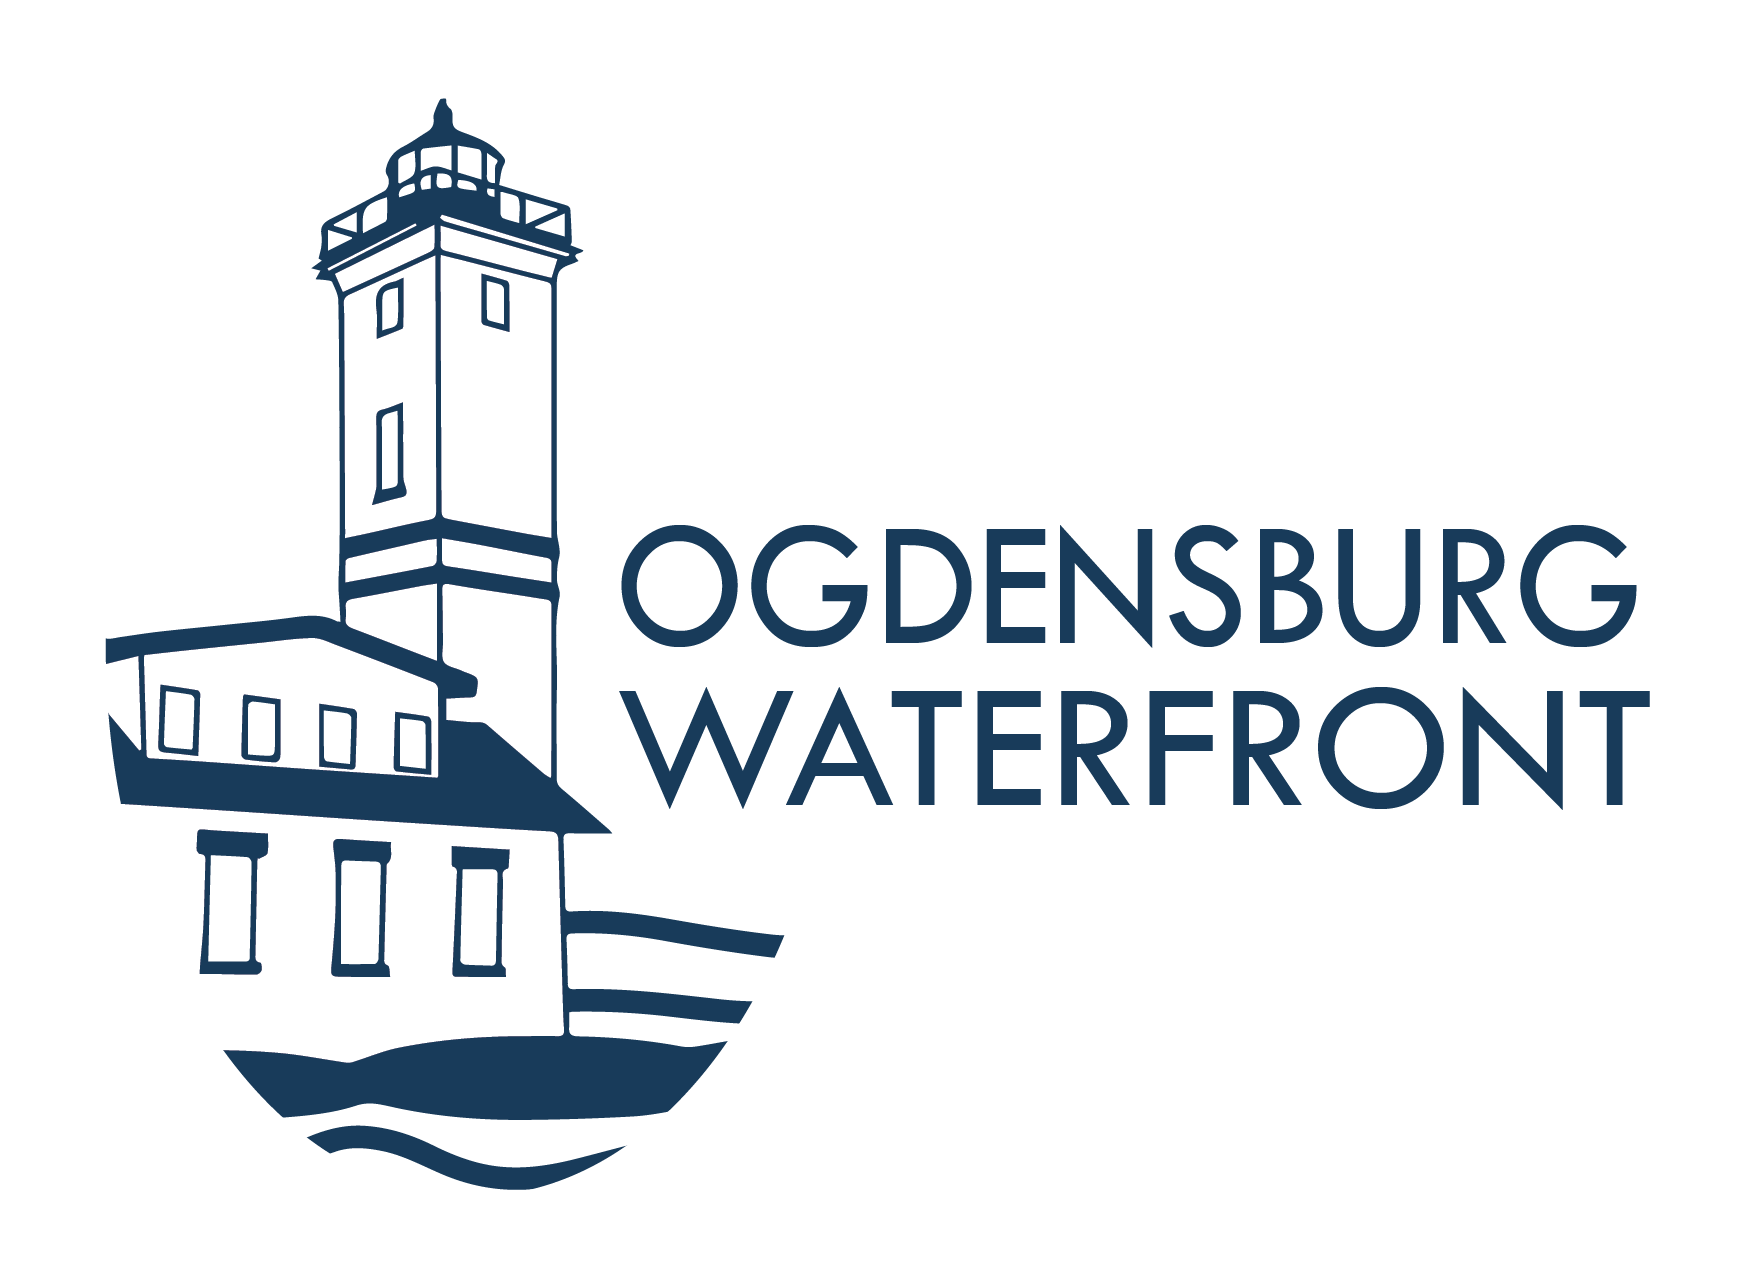 Ogdensburg Waterfront